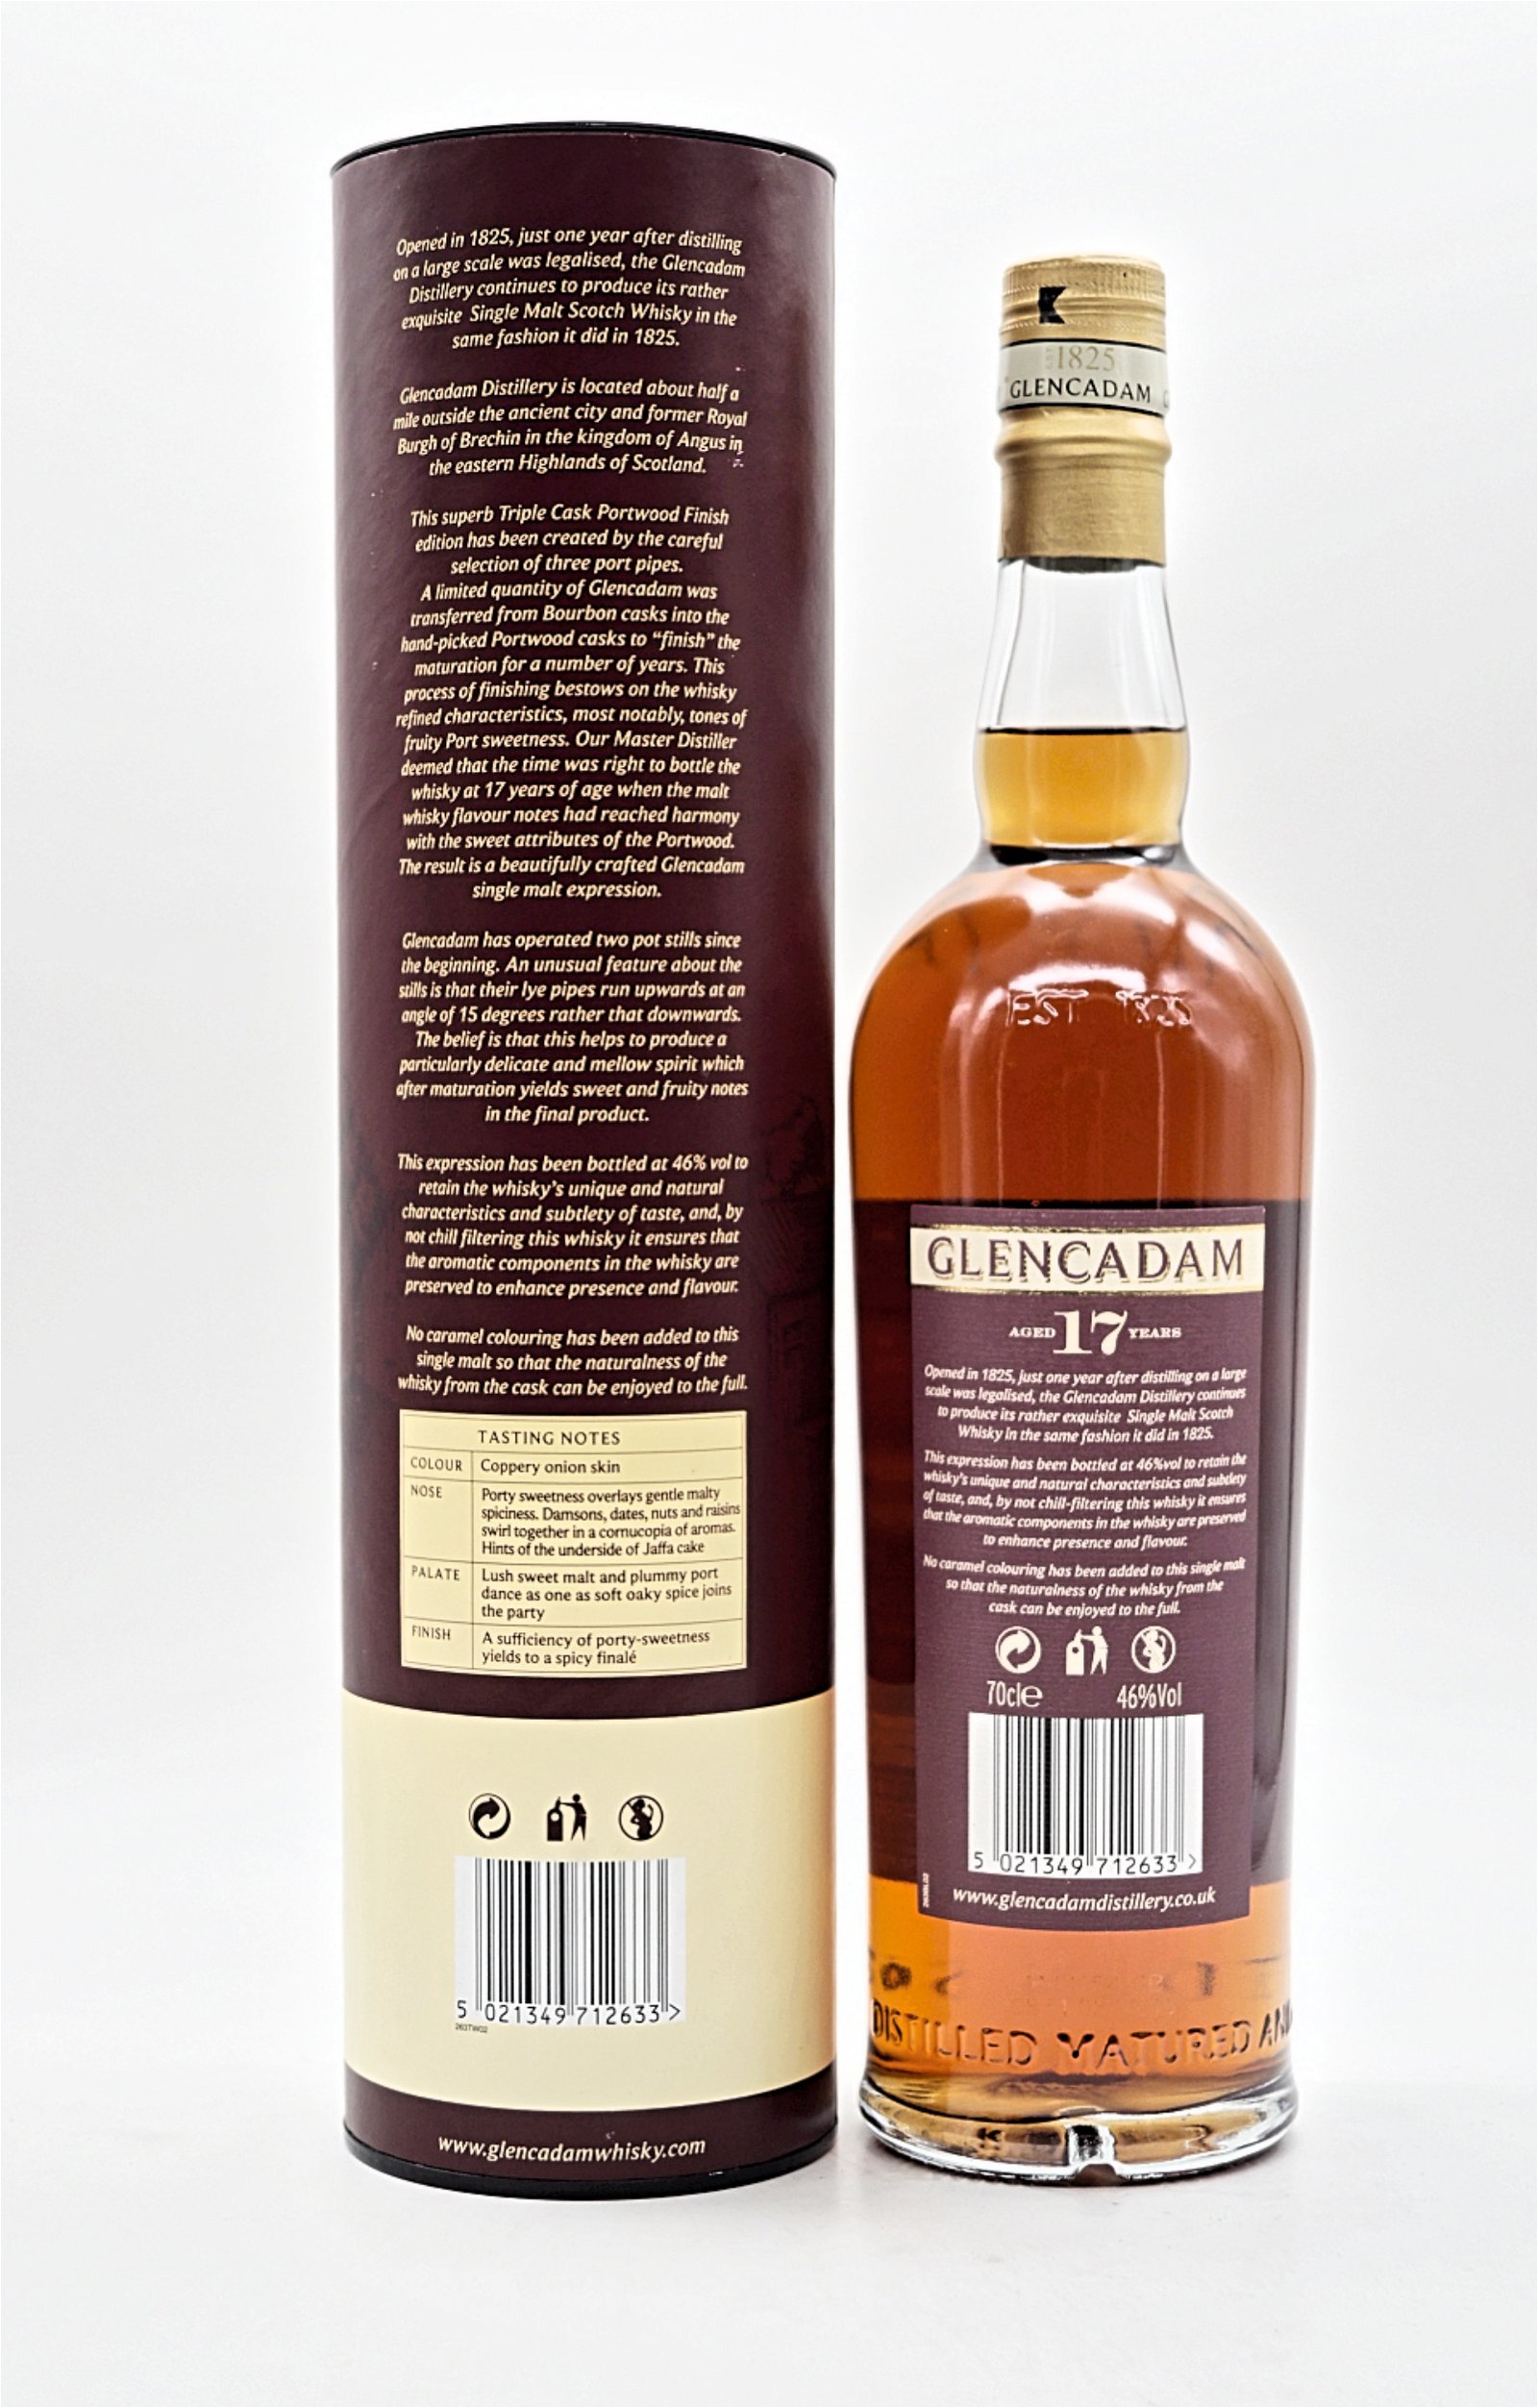 Glencadam 17 Jahre The Rather Exquisite Triple Cask Portwood Finish Highland Single Malt Scotch Whisky